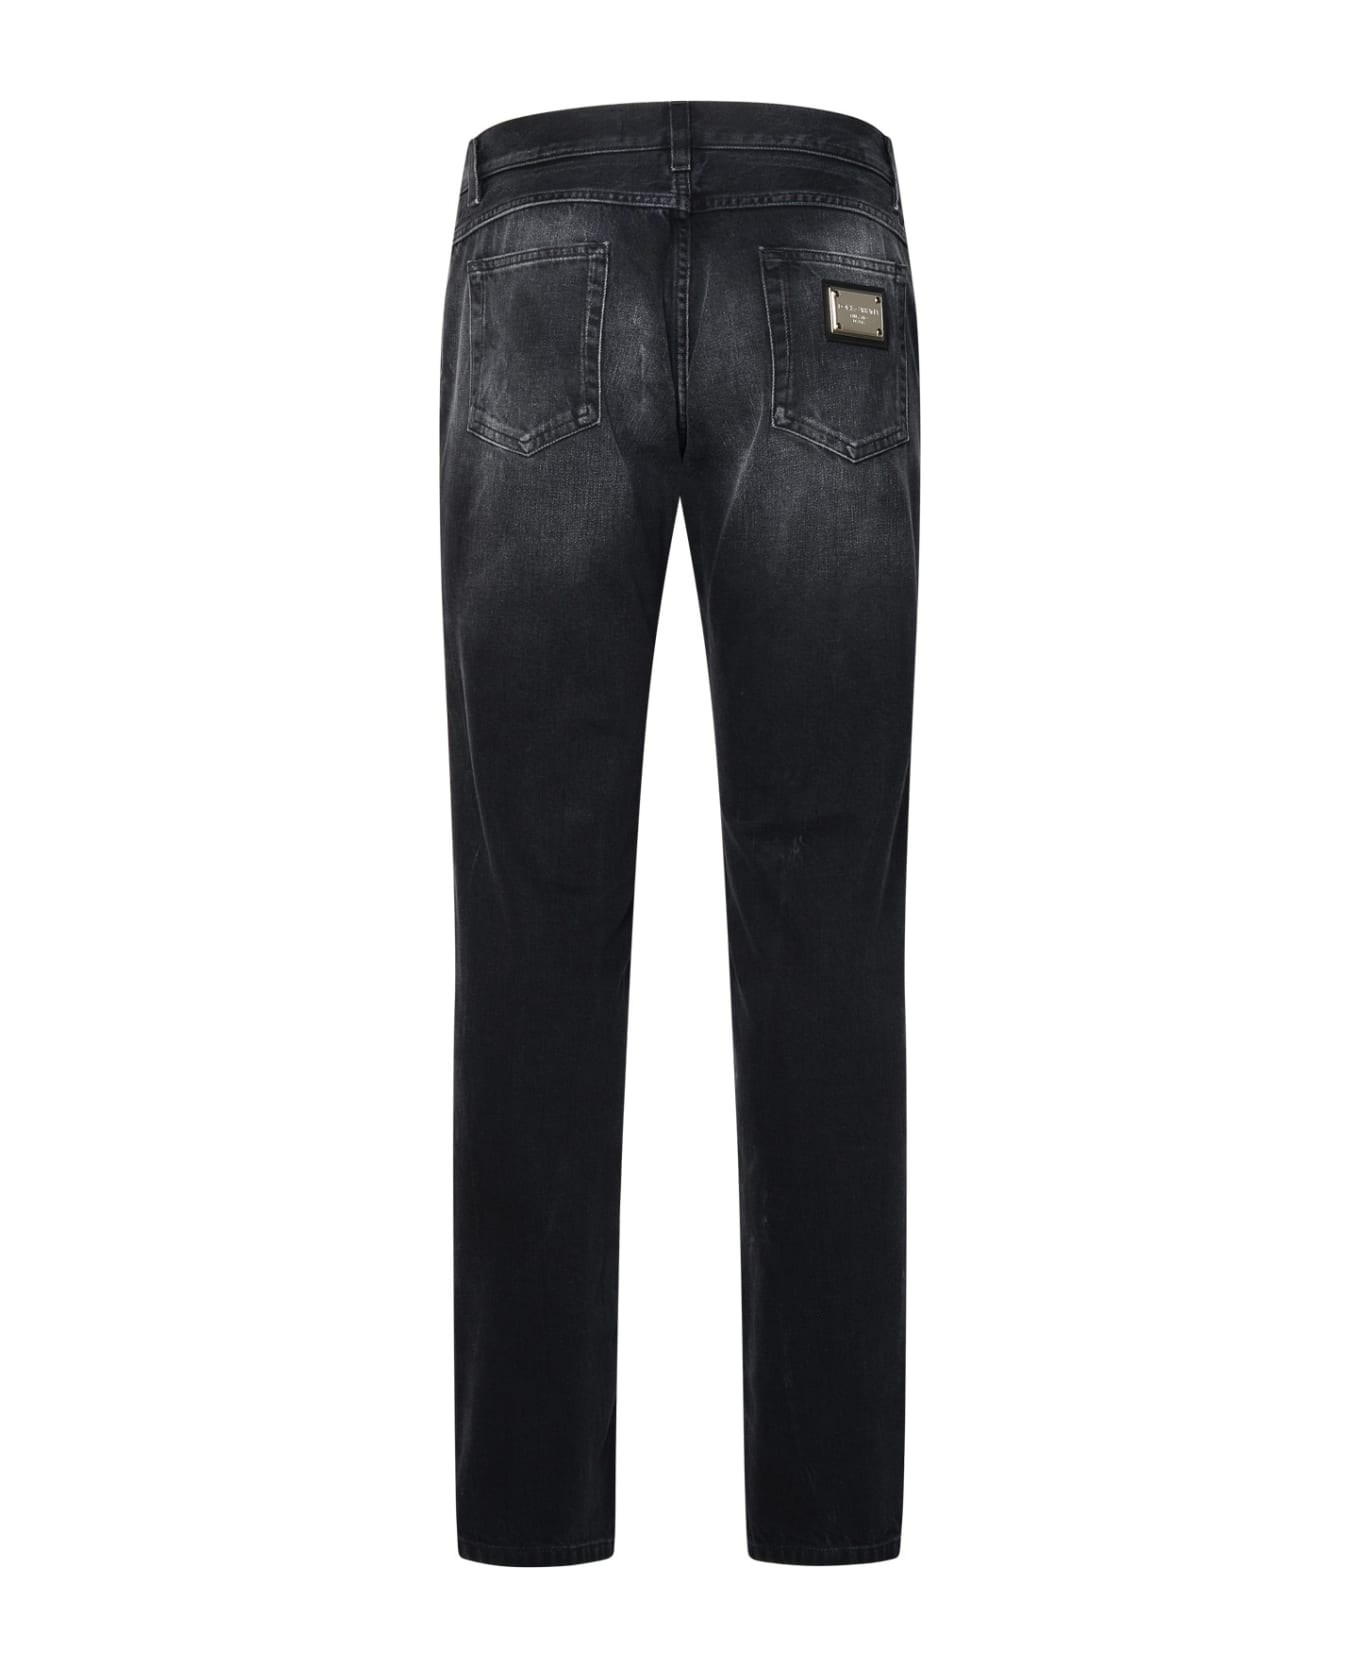 Dolce & Gabbana Black Cotton Jeans - Black